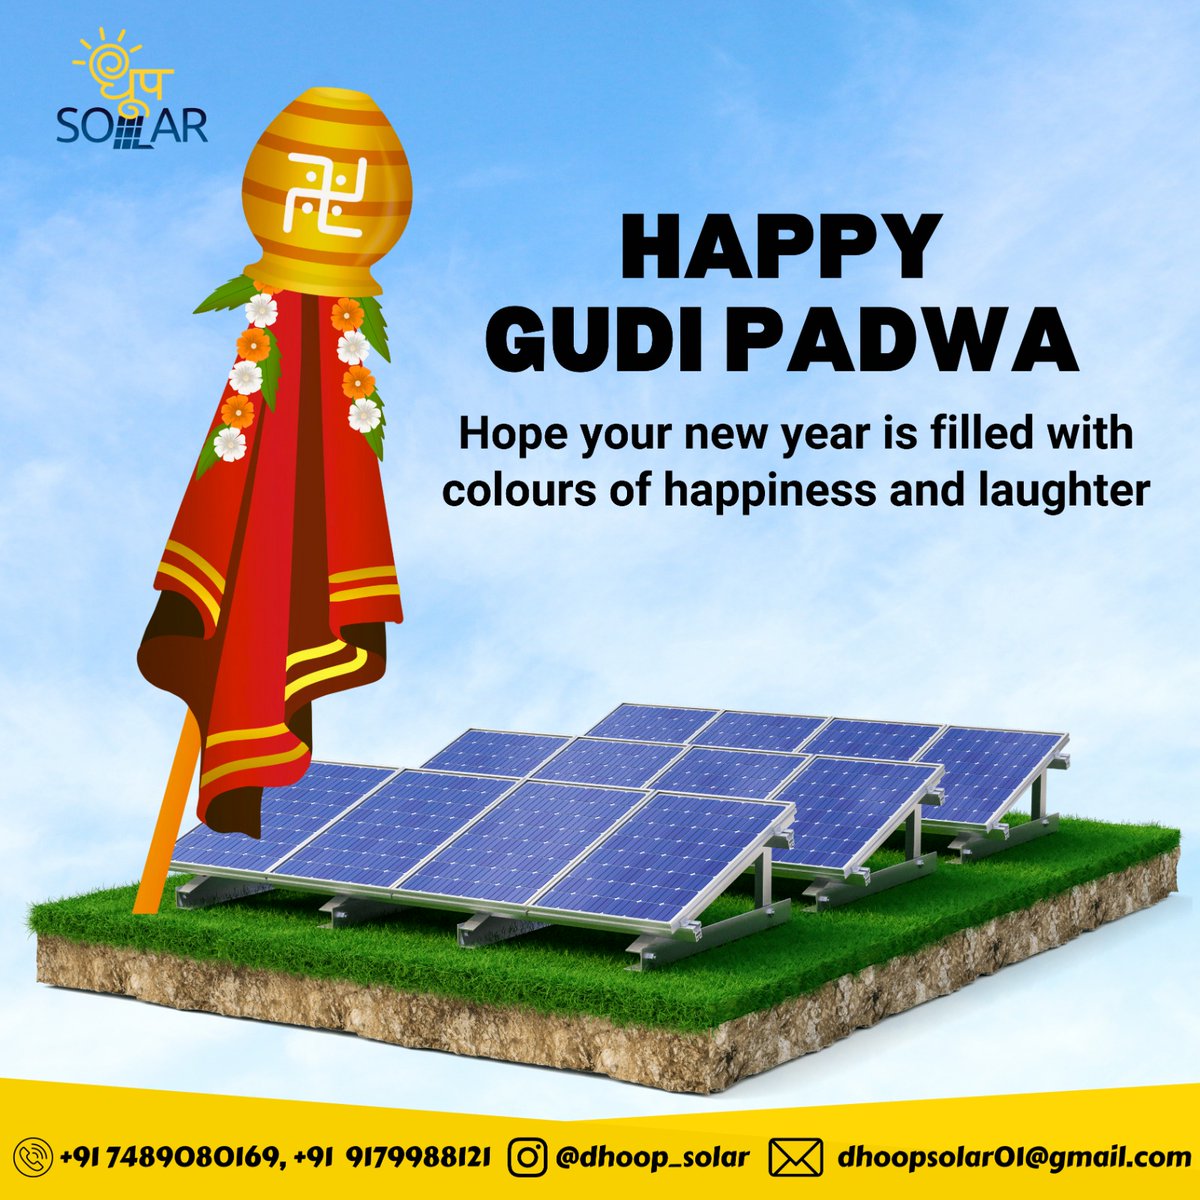 HAPPY GUDIPADWA!
Hope your new year is filled with colors of happiness and laughter
.
.
#GudiPadwa2024 #ShubhGudiPadwa #GudiParvaCelebrations #MarathiNewYear #SpringFestival #GudiRaising #PuranPoliLove #RangaRangoli #MaharashtraFestival #NewBeginnings